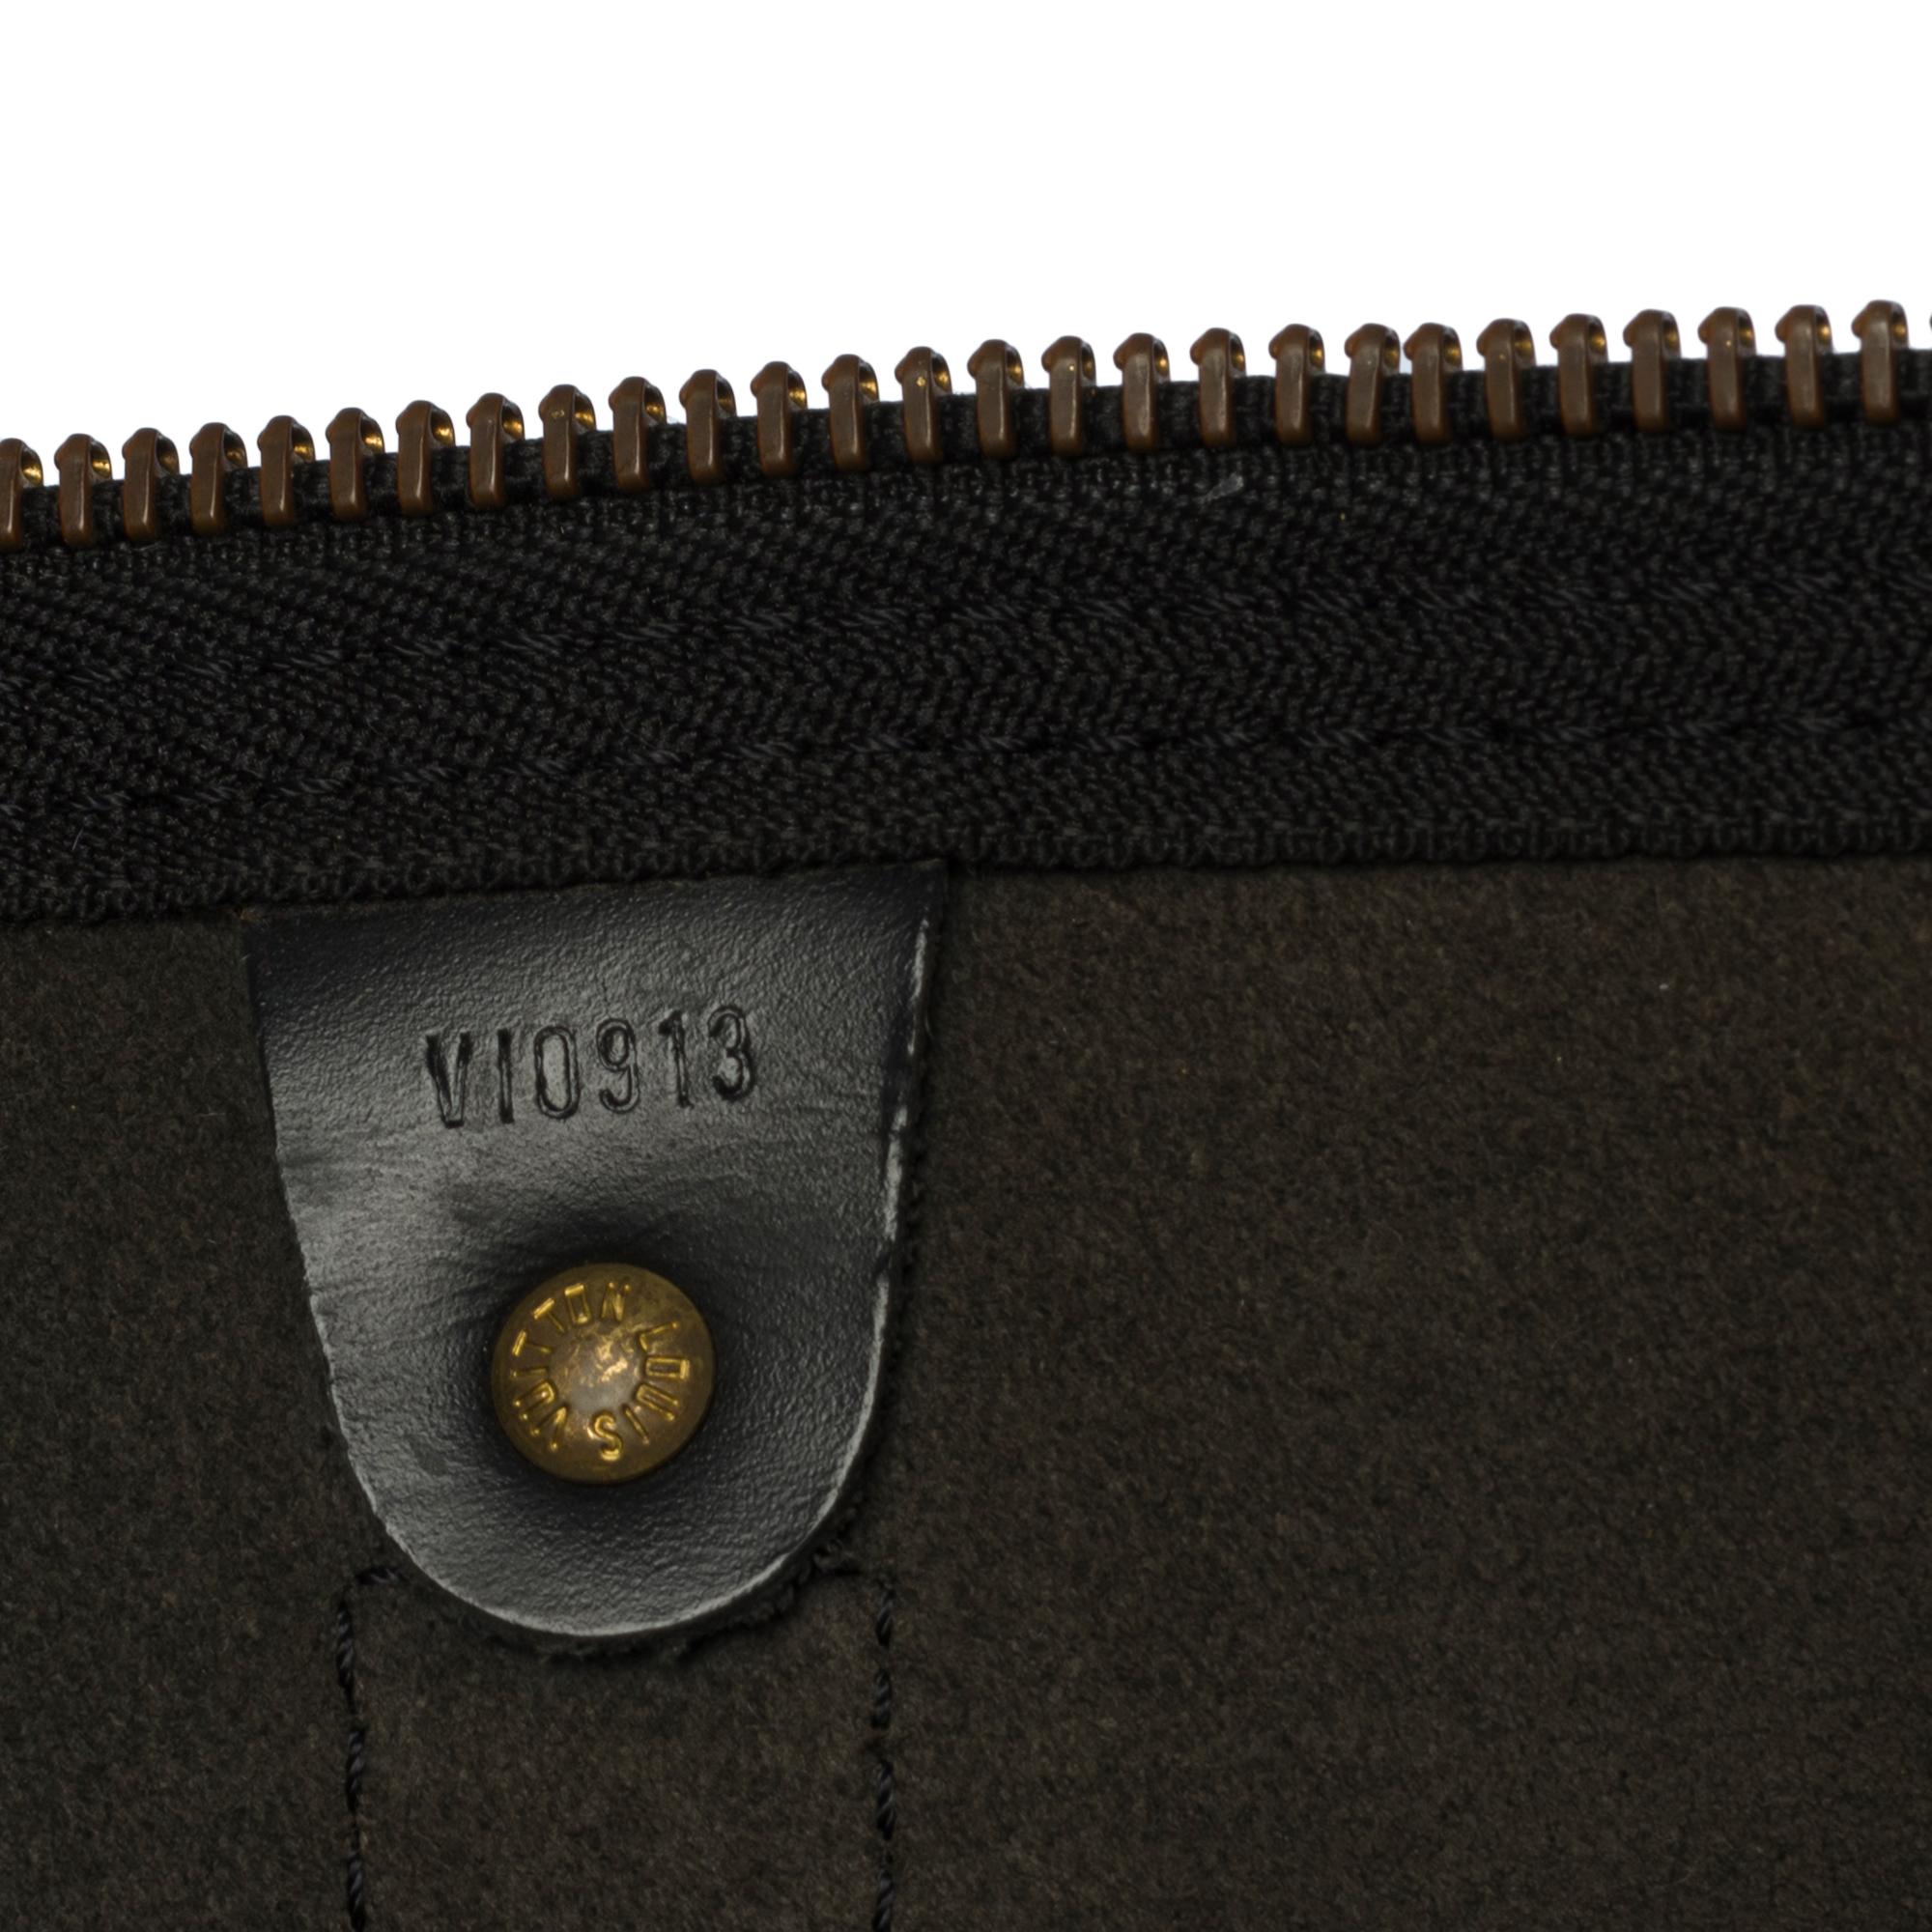 Women's or Men's Louis Vuitton Keepall 45 Travel bag in black épi leather